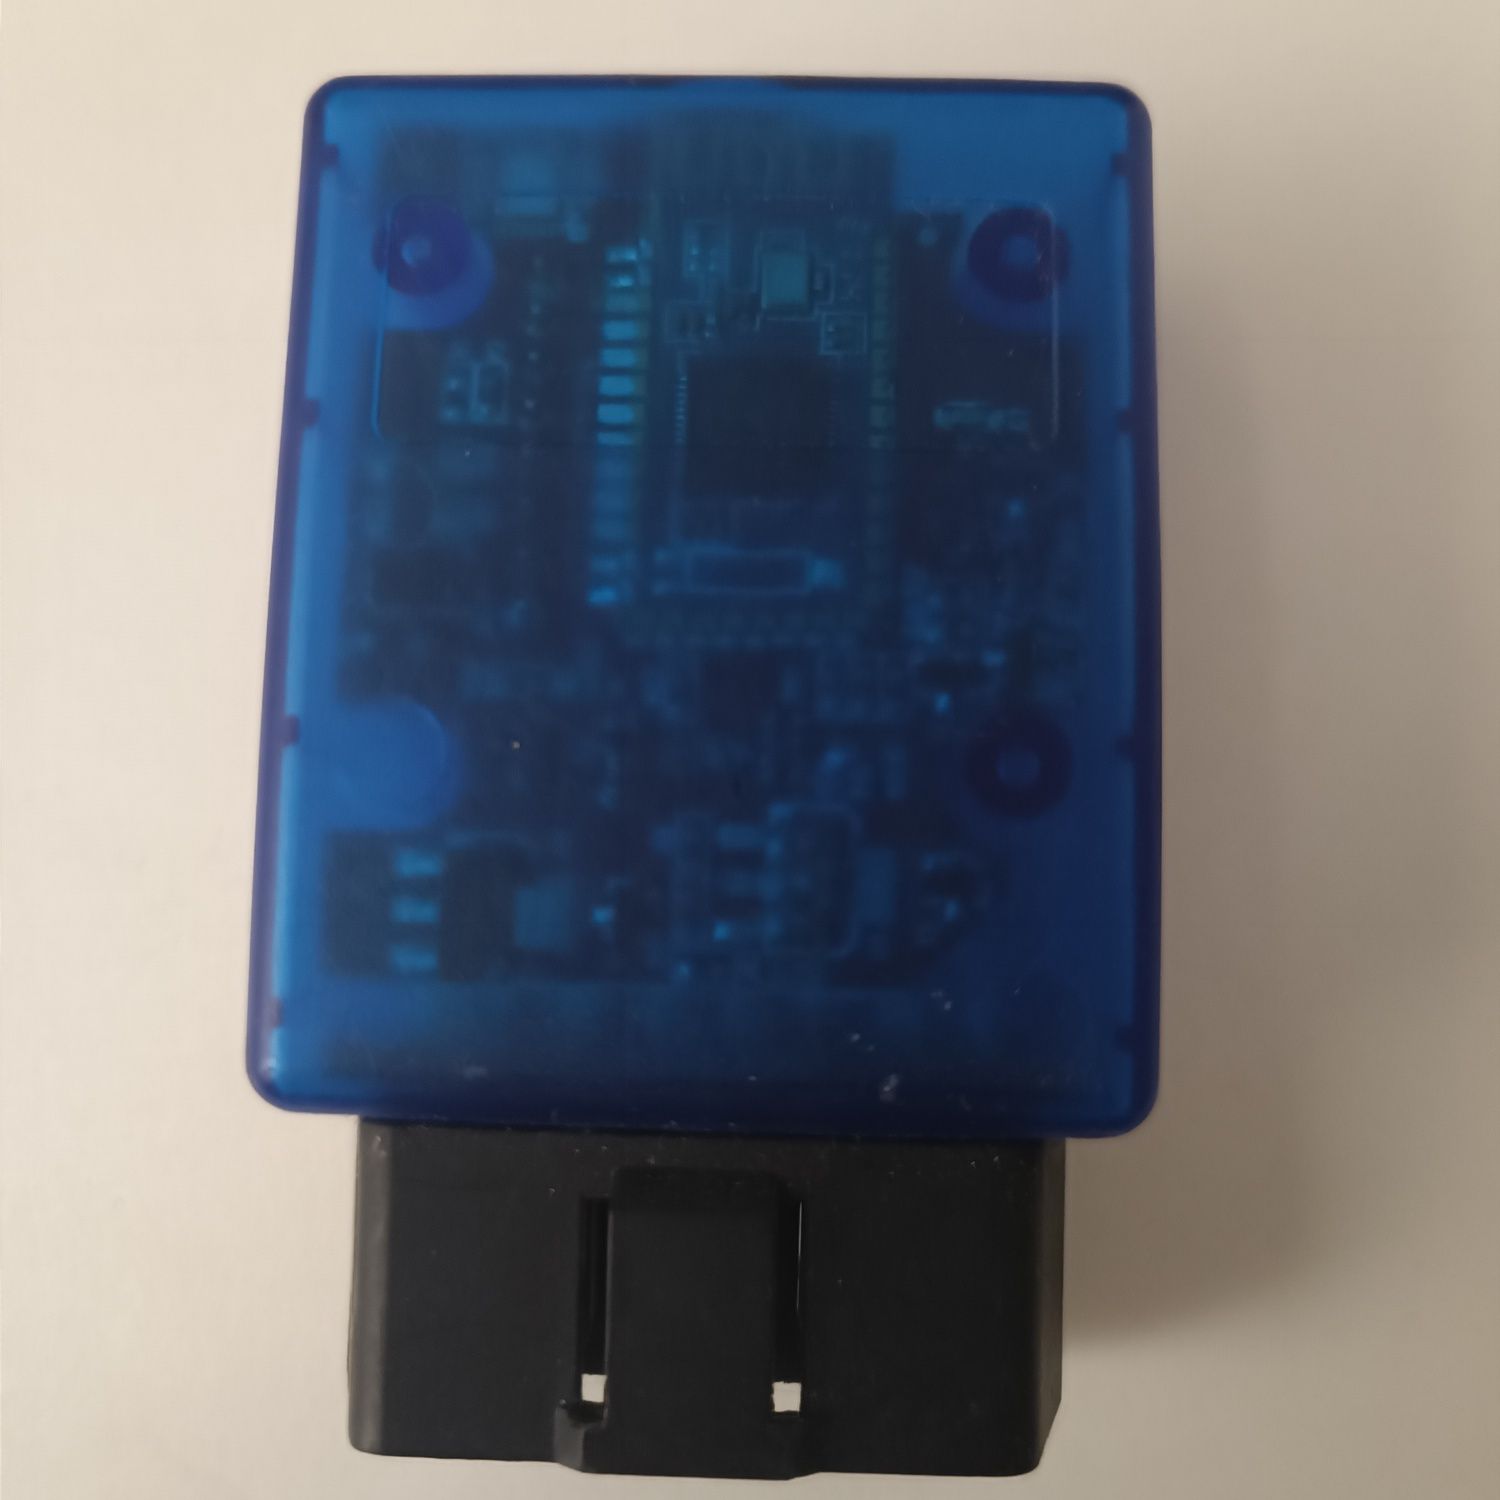 Діагностичний сканер OBD2 ОБД2 блютуз Bluetooth